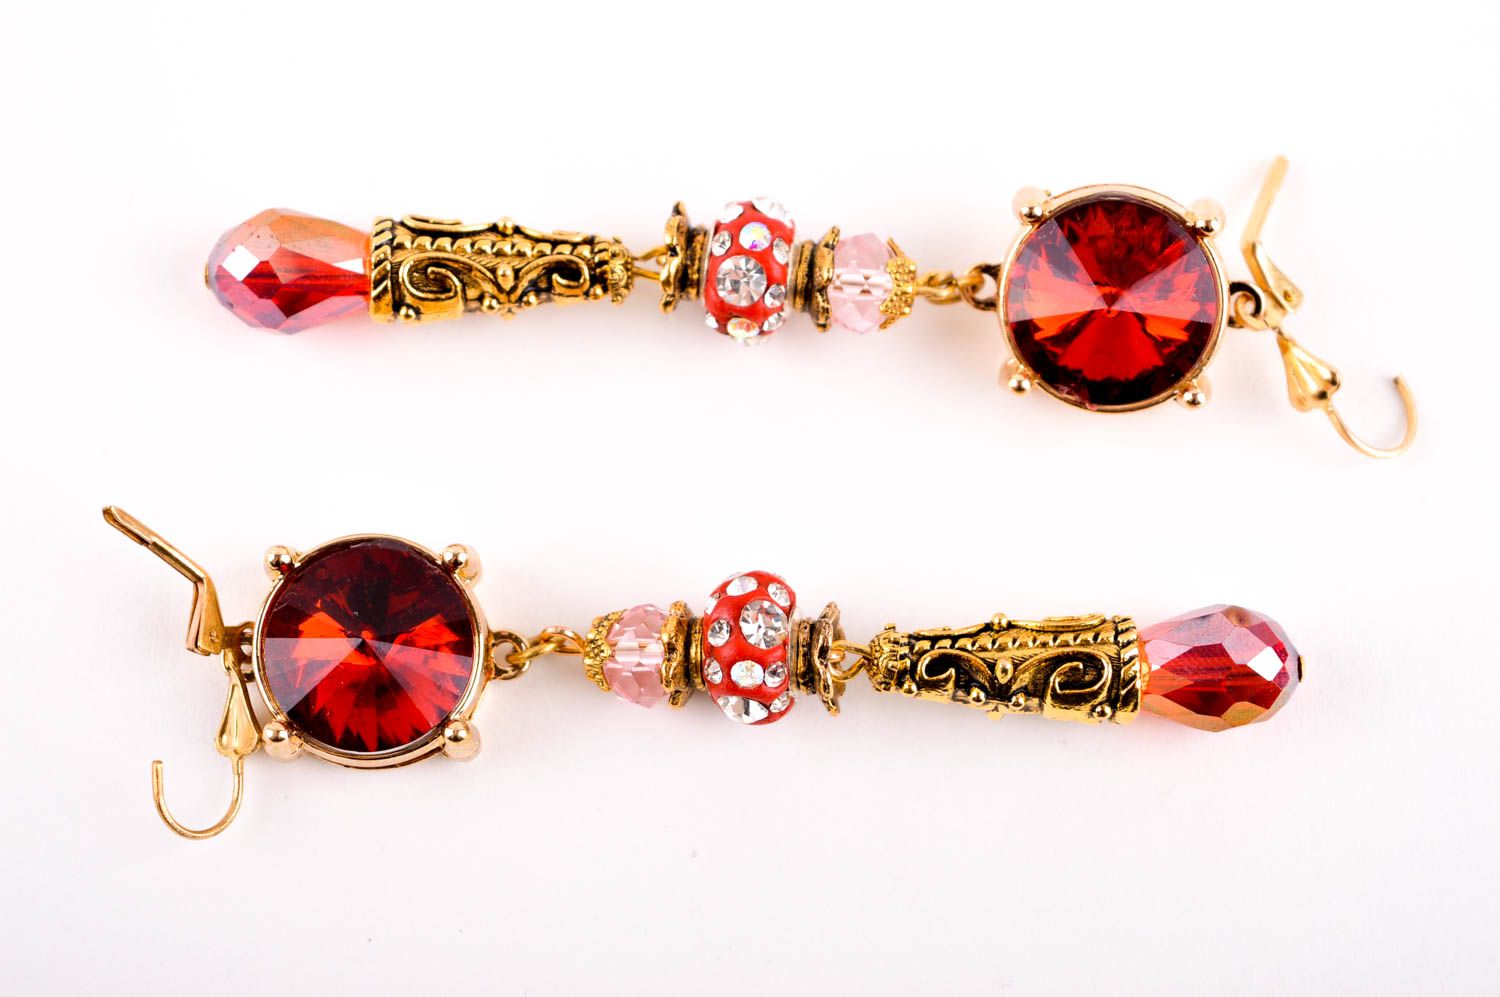 Handmade earrings designer earrings with charms unusual gift for girls photo 5